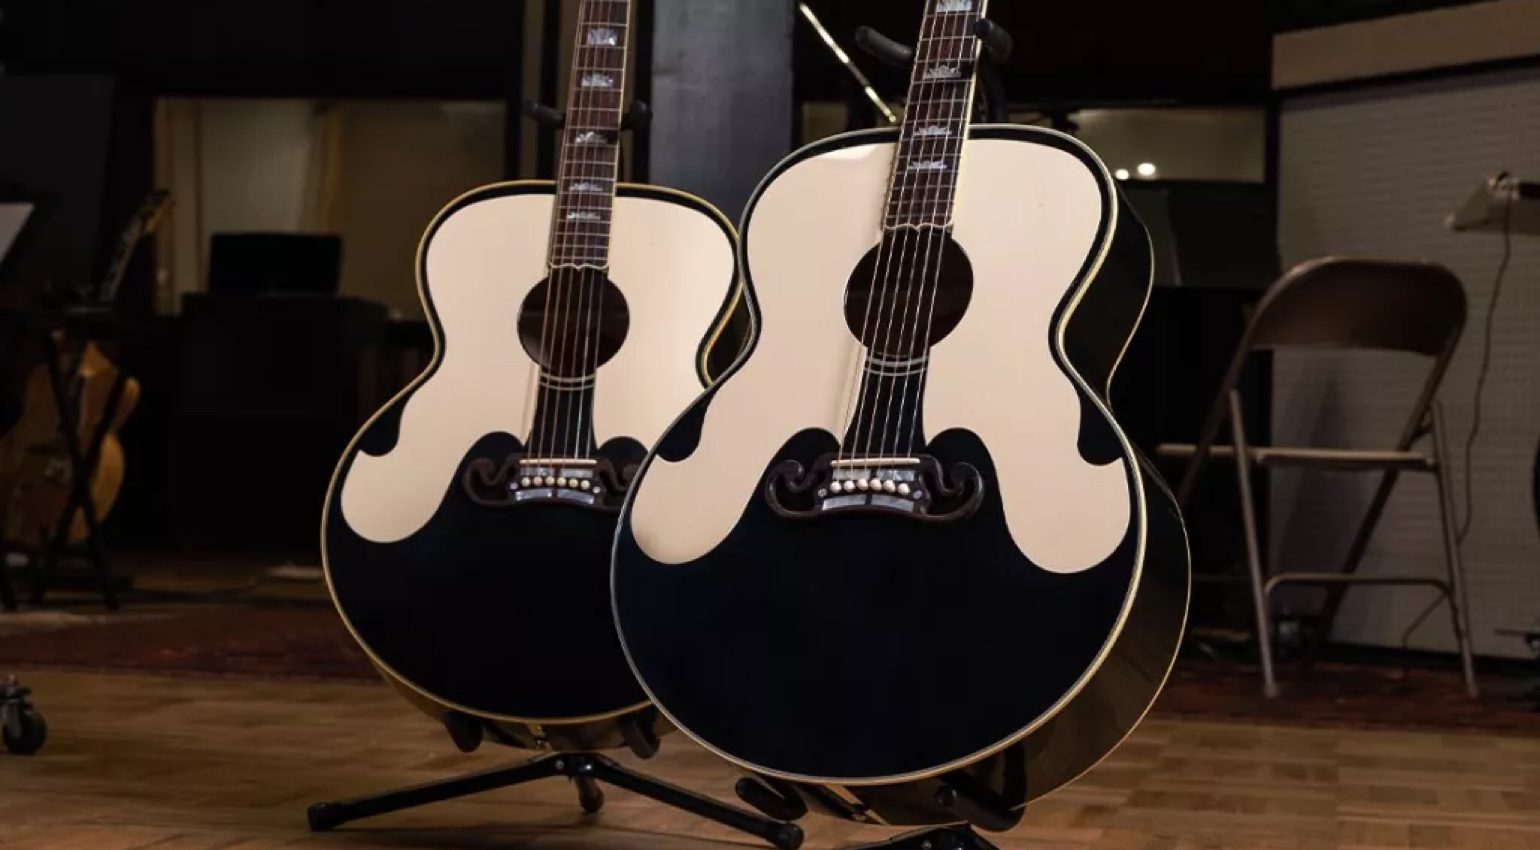 Gibson Everly Brothers SJ-200 édition ultra limitée annoncée